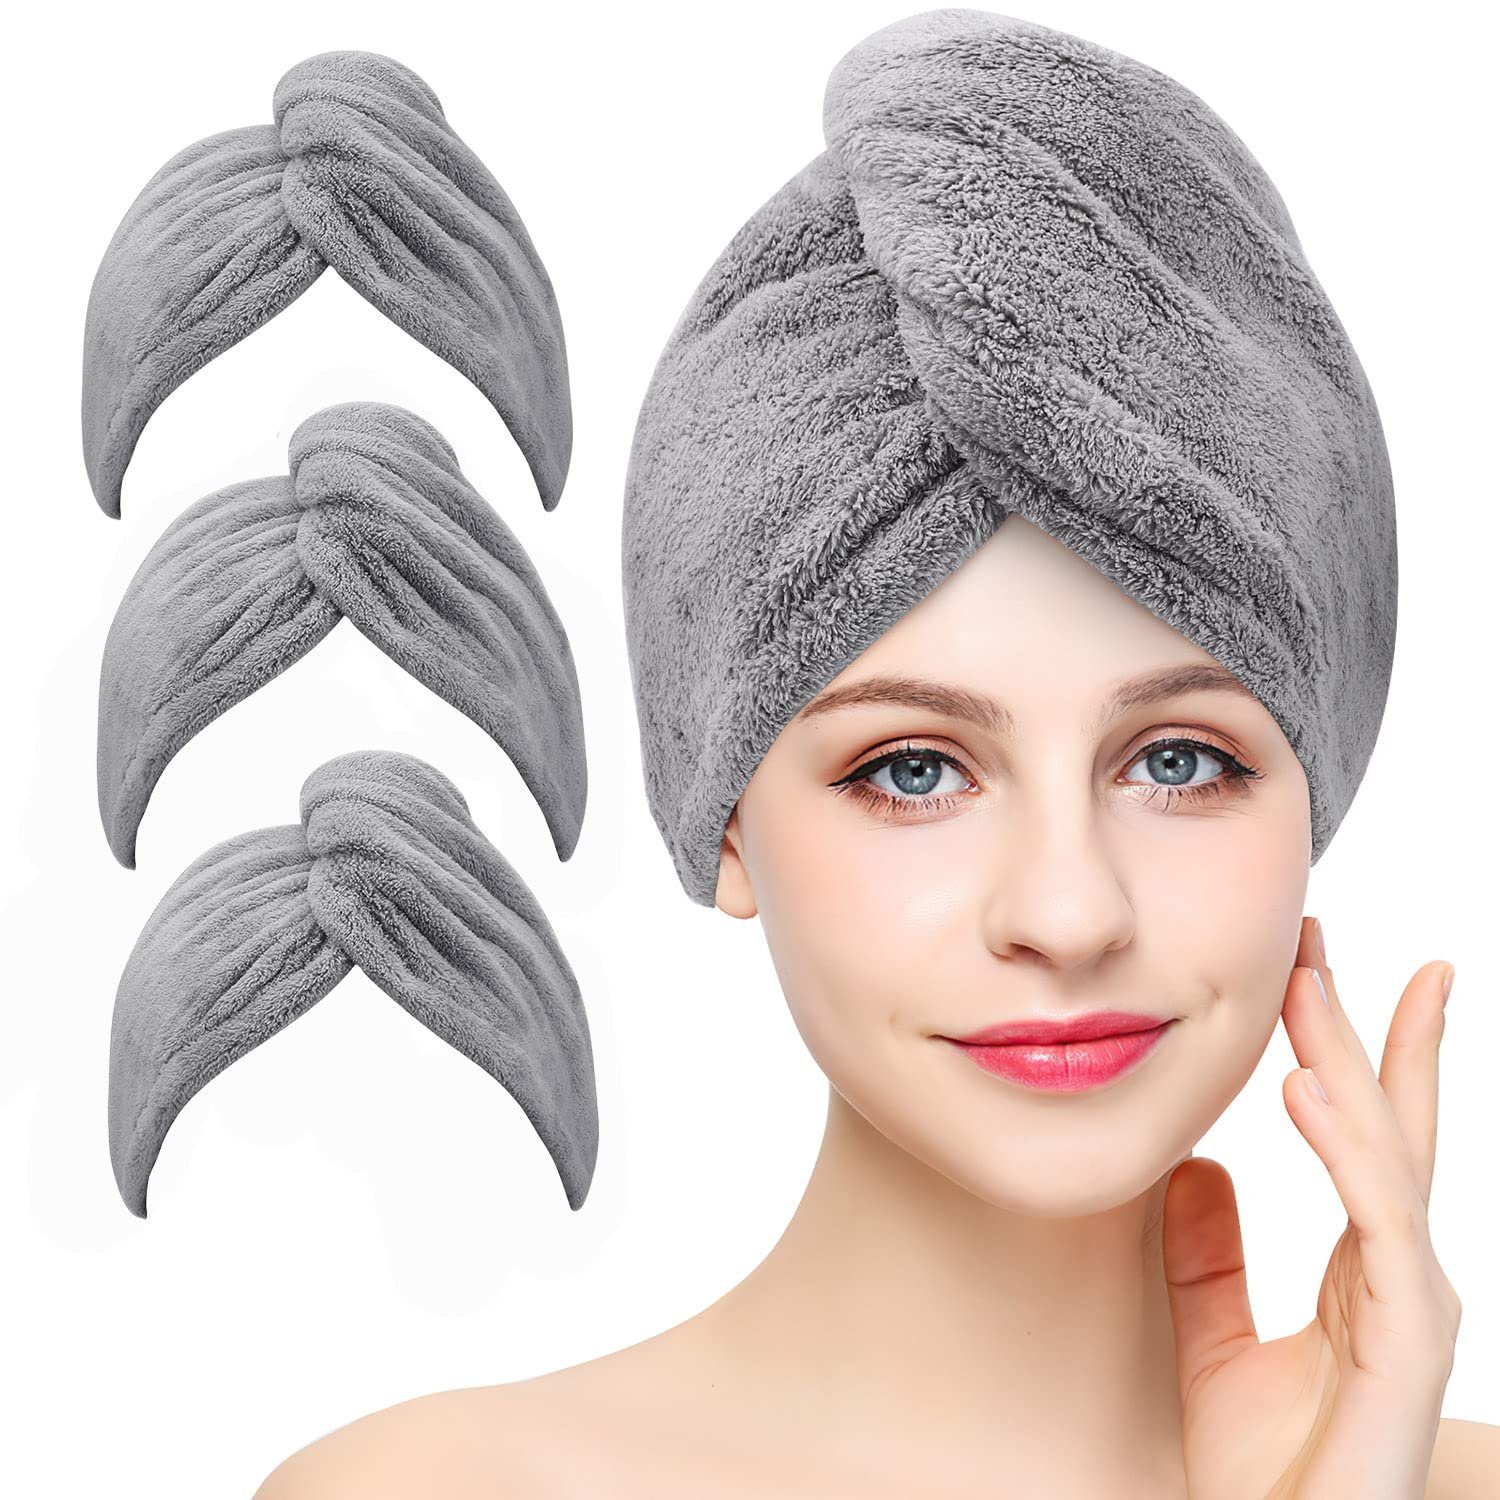 Jormftte Handtücher Haartuch Turban,Mikrofaser-Haartrocknung Handtuch mit Knopfdesign